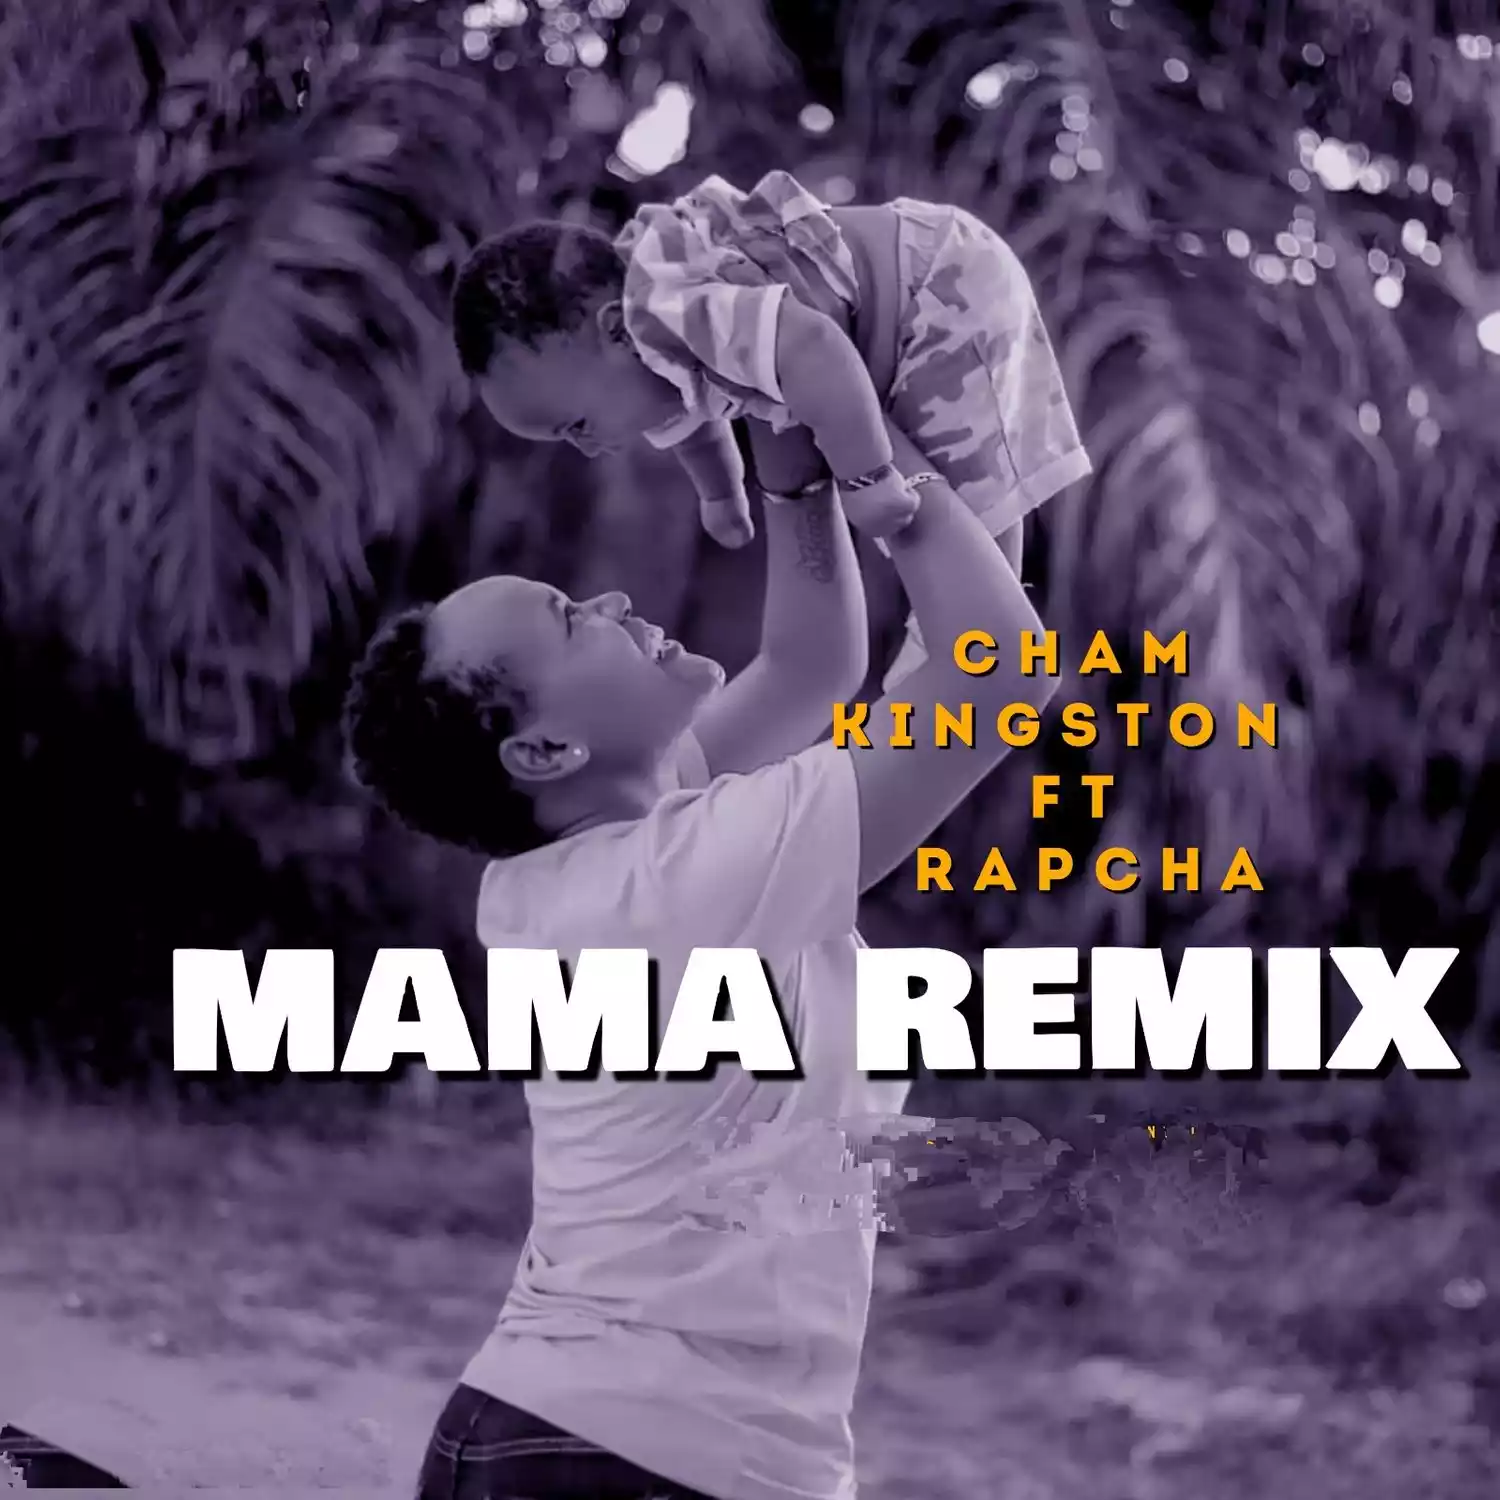 Cham Kingston ft Rapcha - Mama Remix Mp3 Download